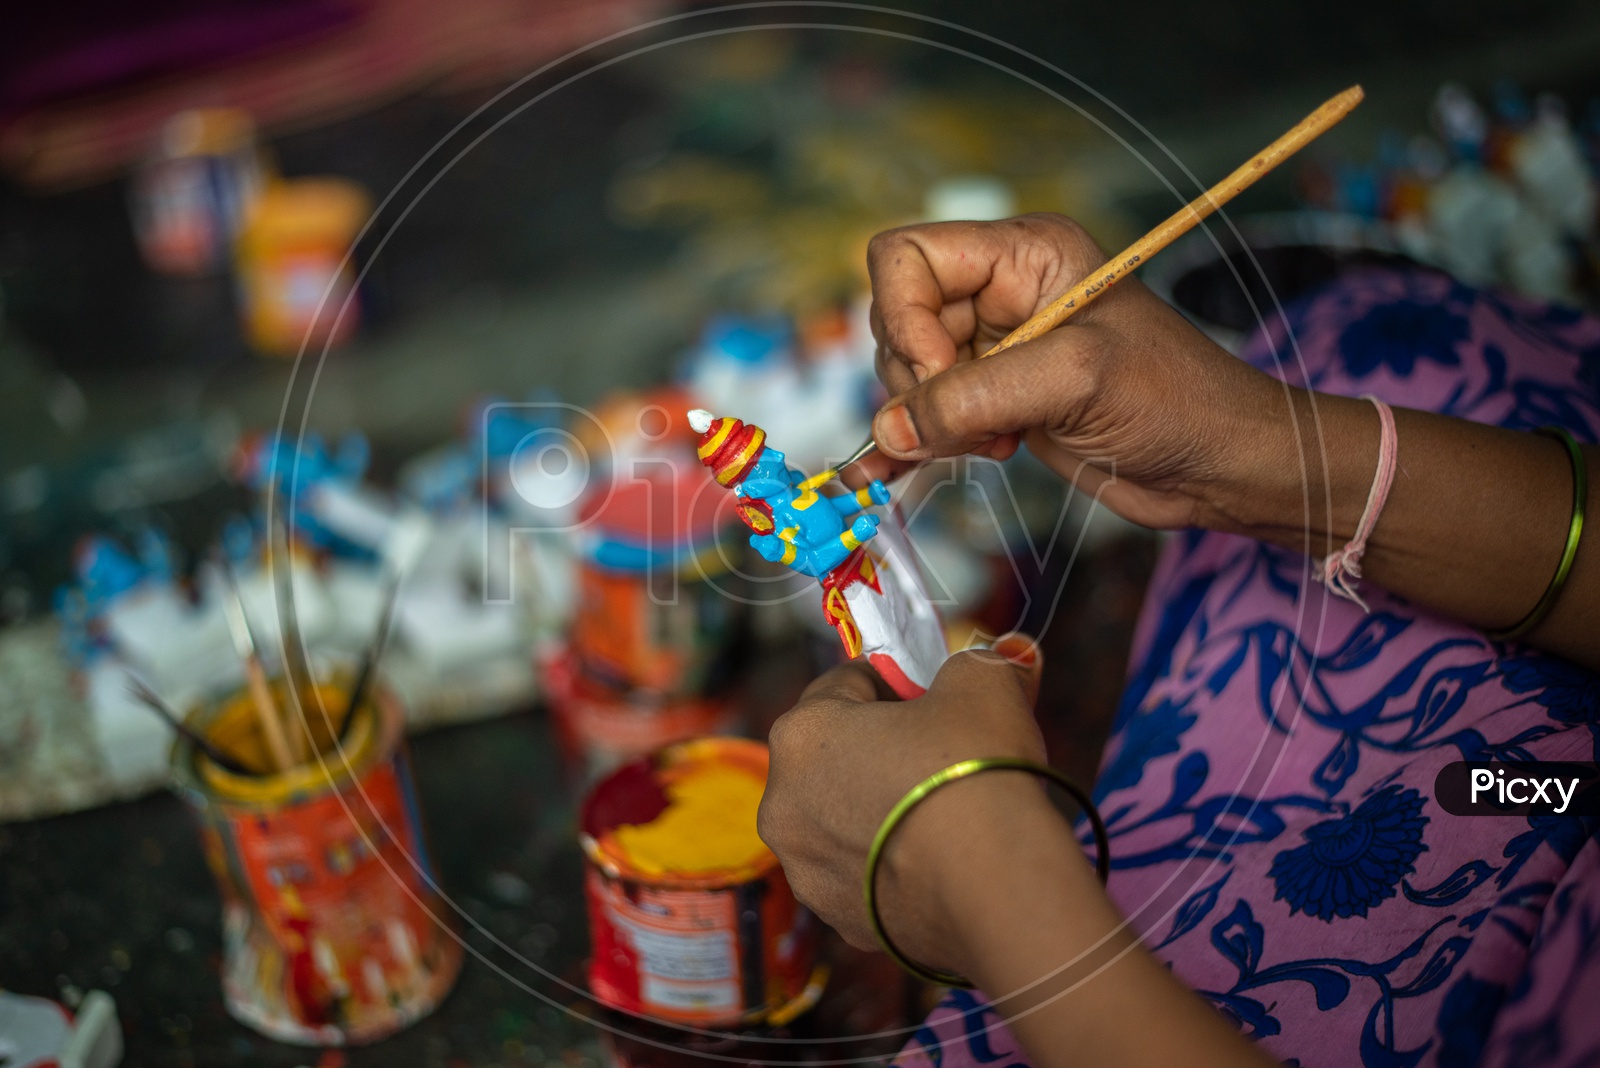 A woman painting Kondapally Toy/Bomma